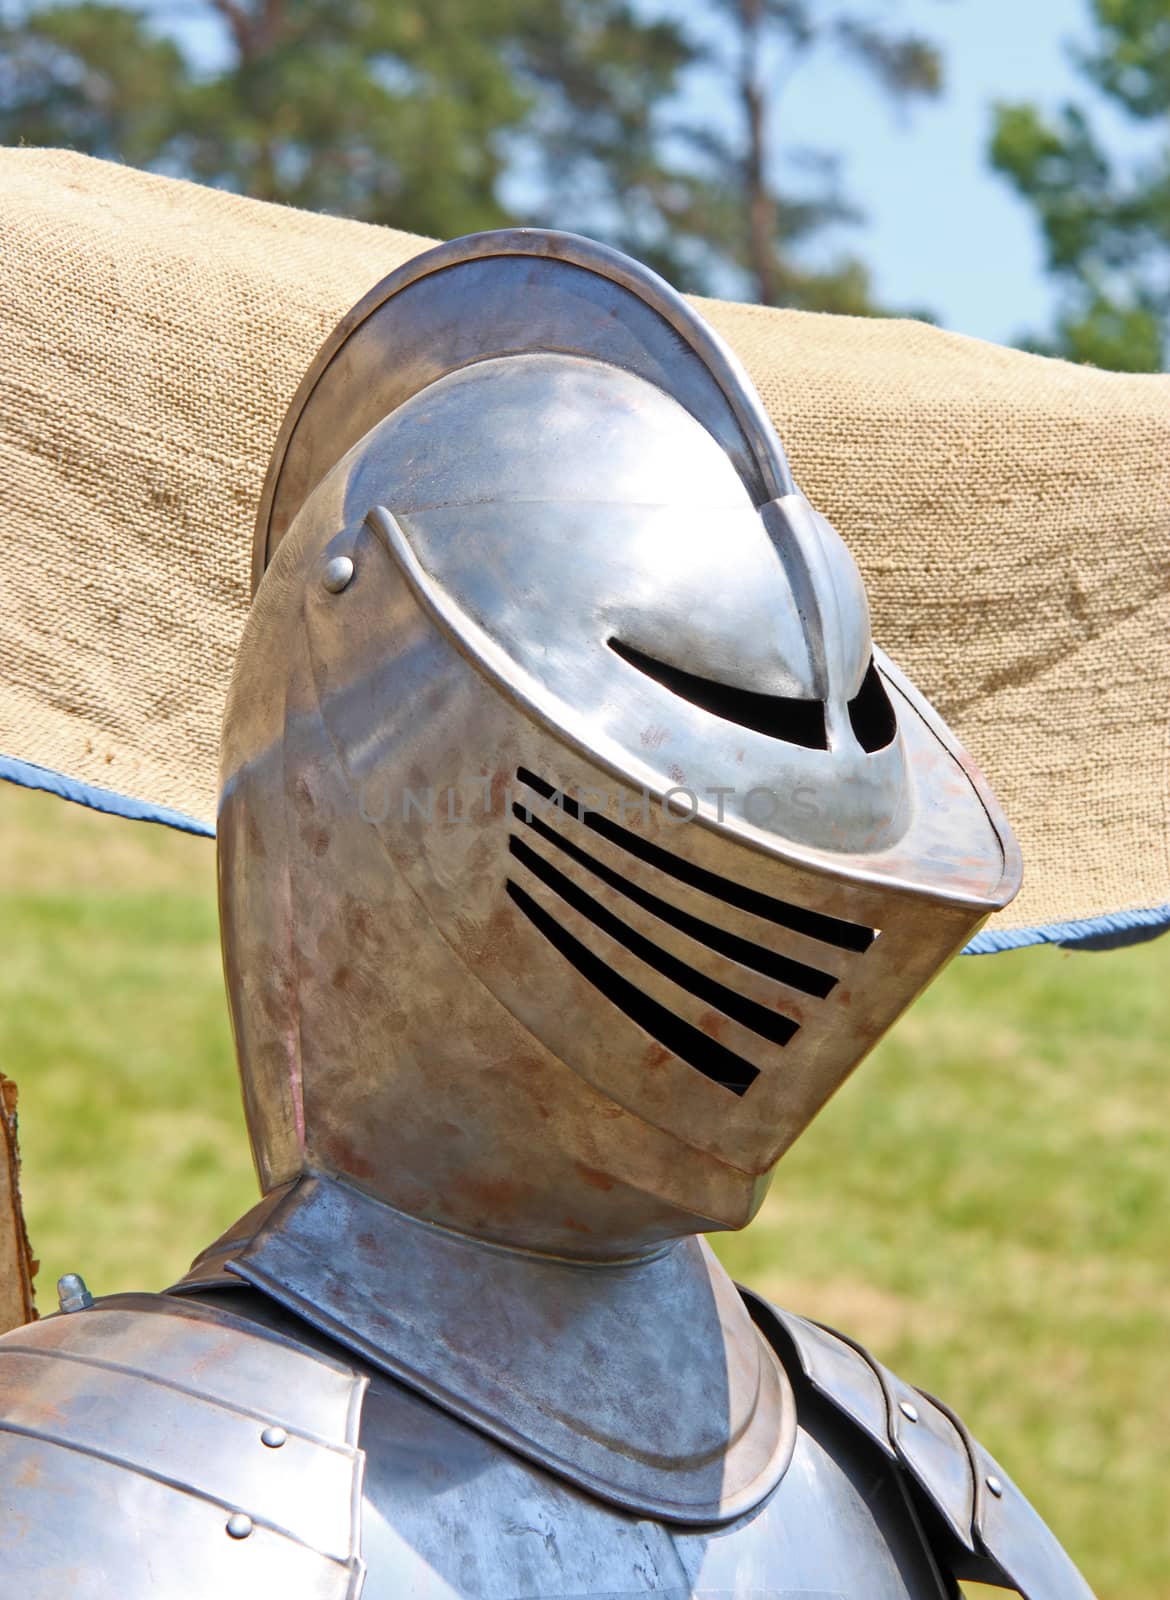 Knight's helmet by Boris15